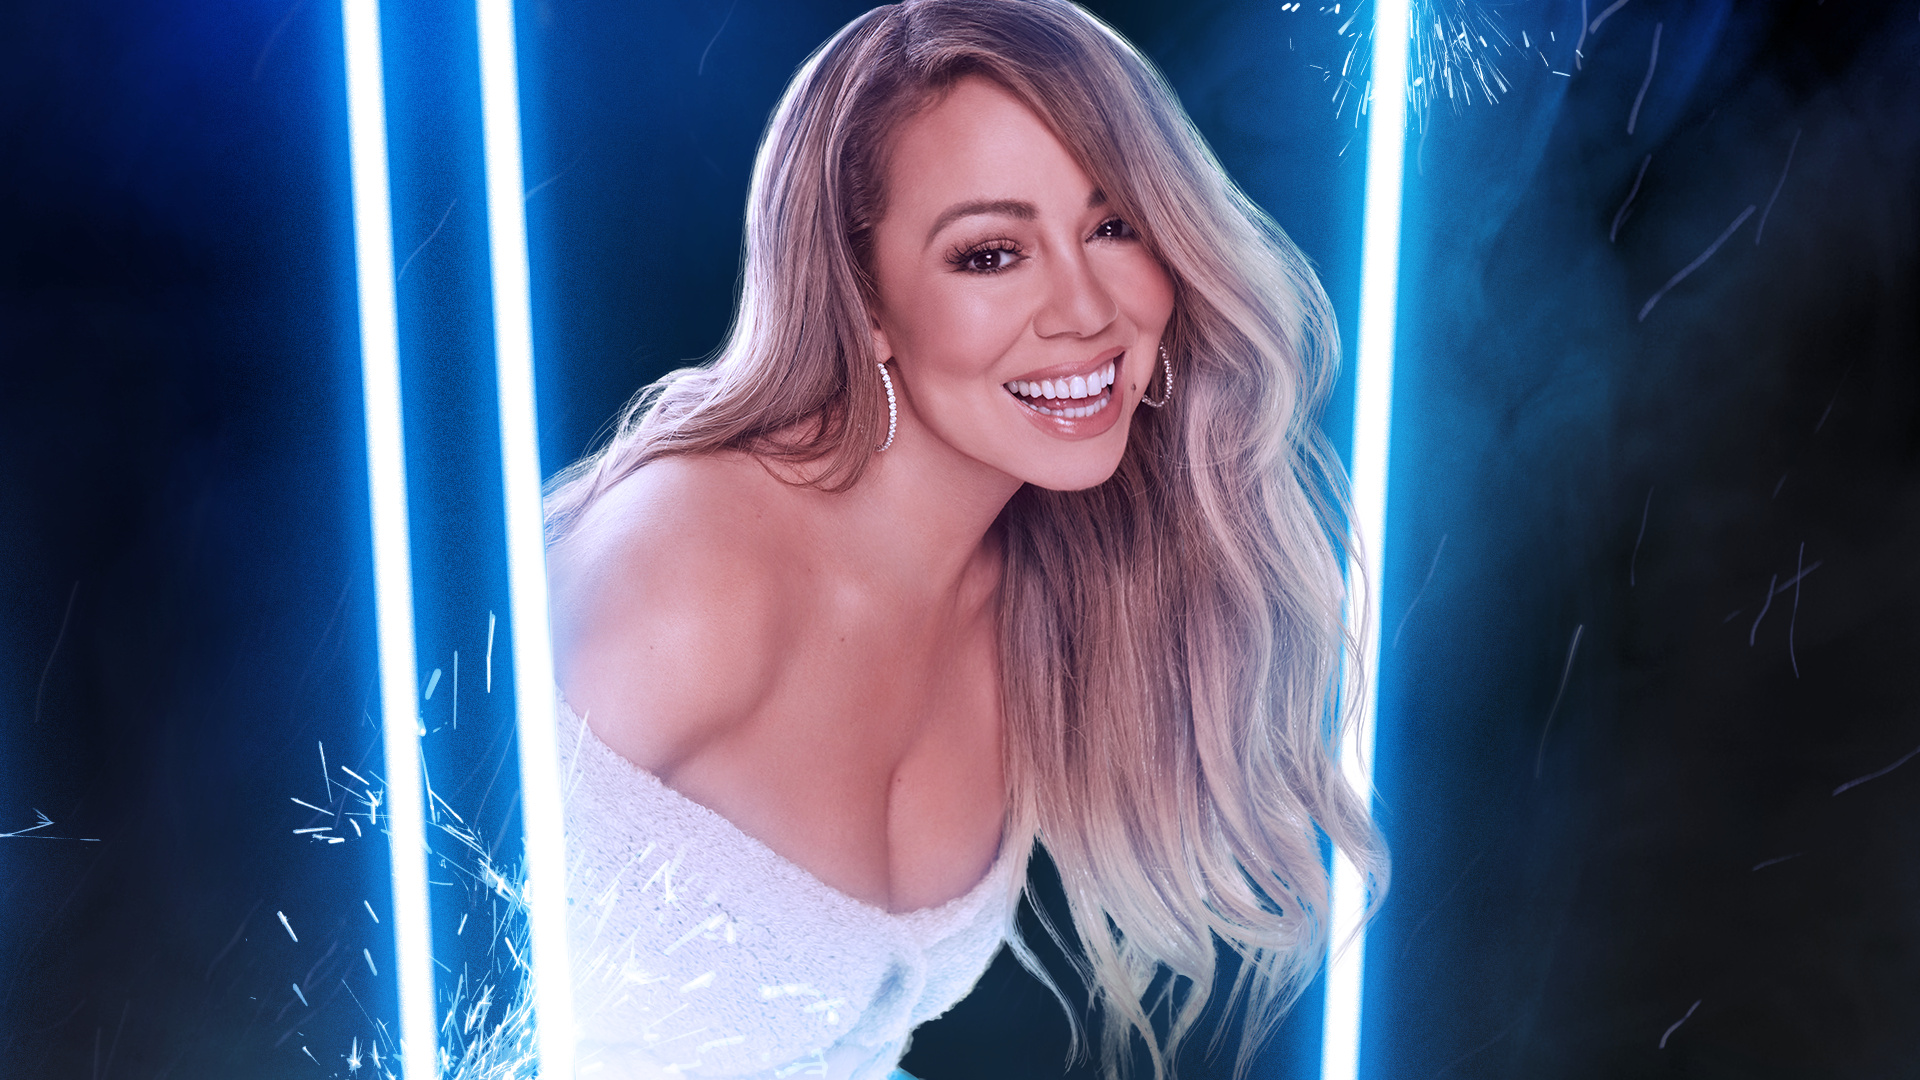 Mariah Carey, 2018 wallpapers, Top free, Backgrounds, 1920x1080 Full HD Desktop